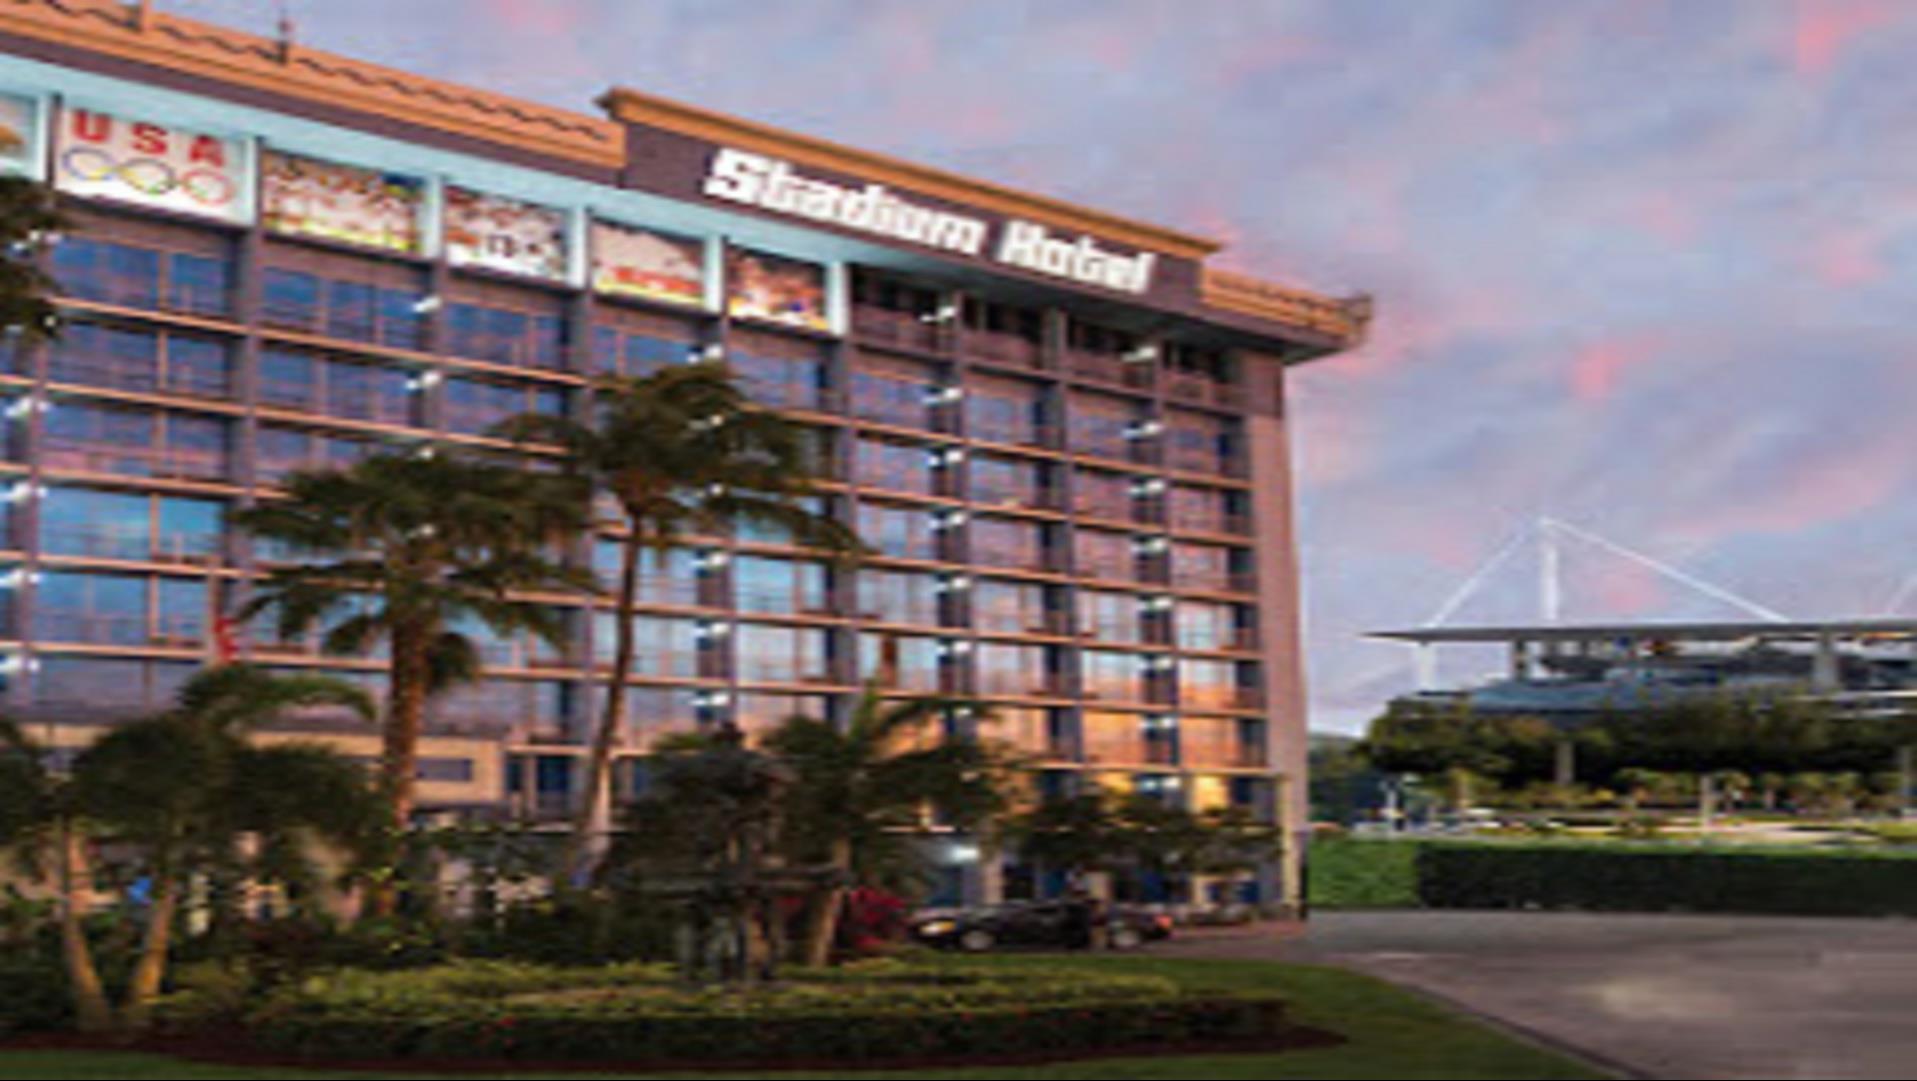 Stadium Hotel in Miami Gardens, FL